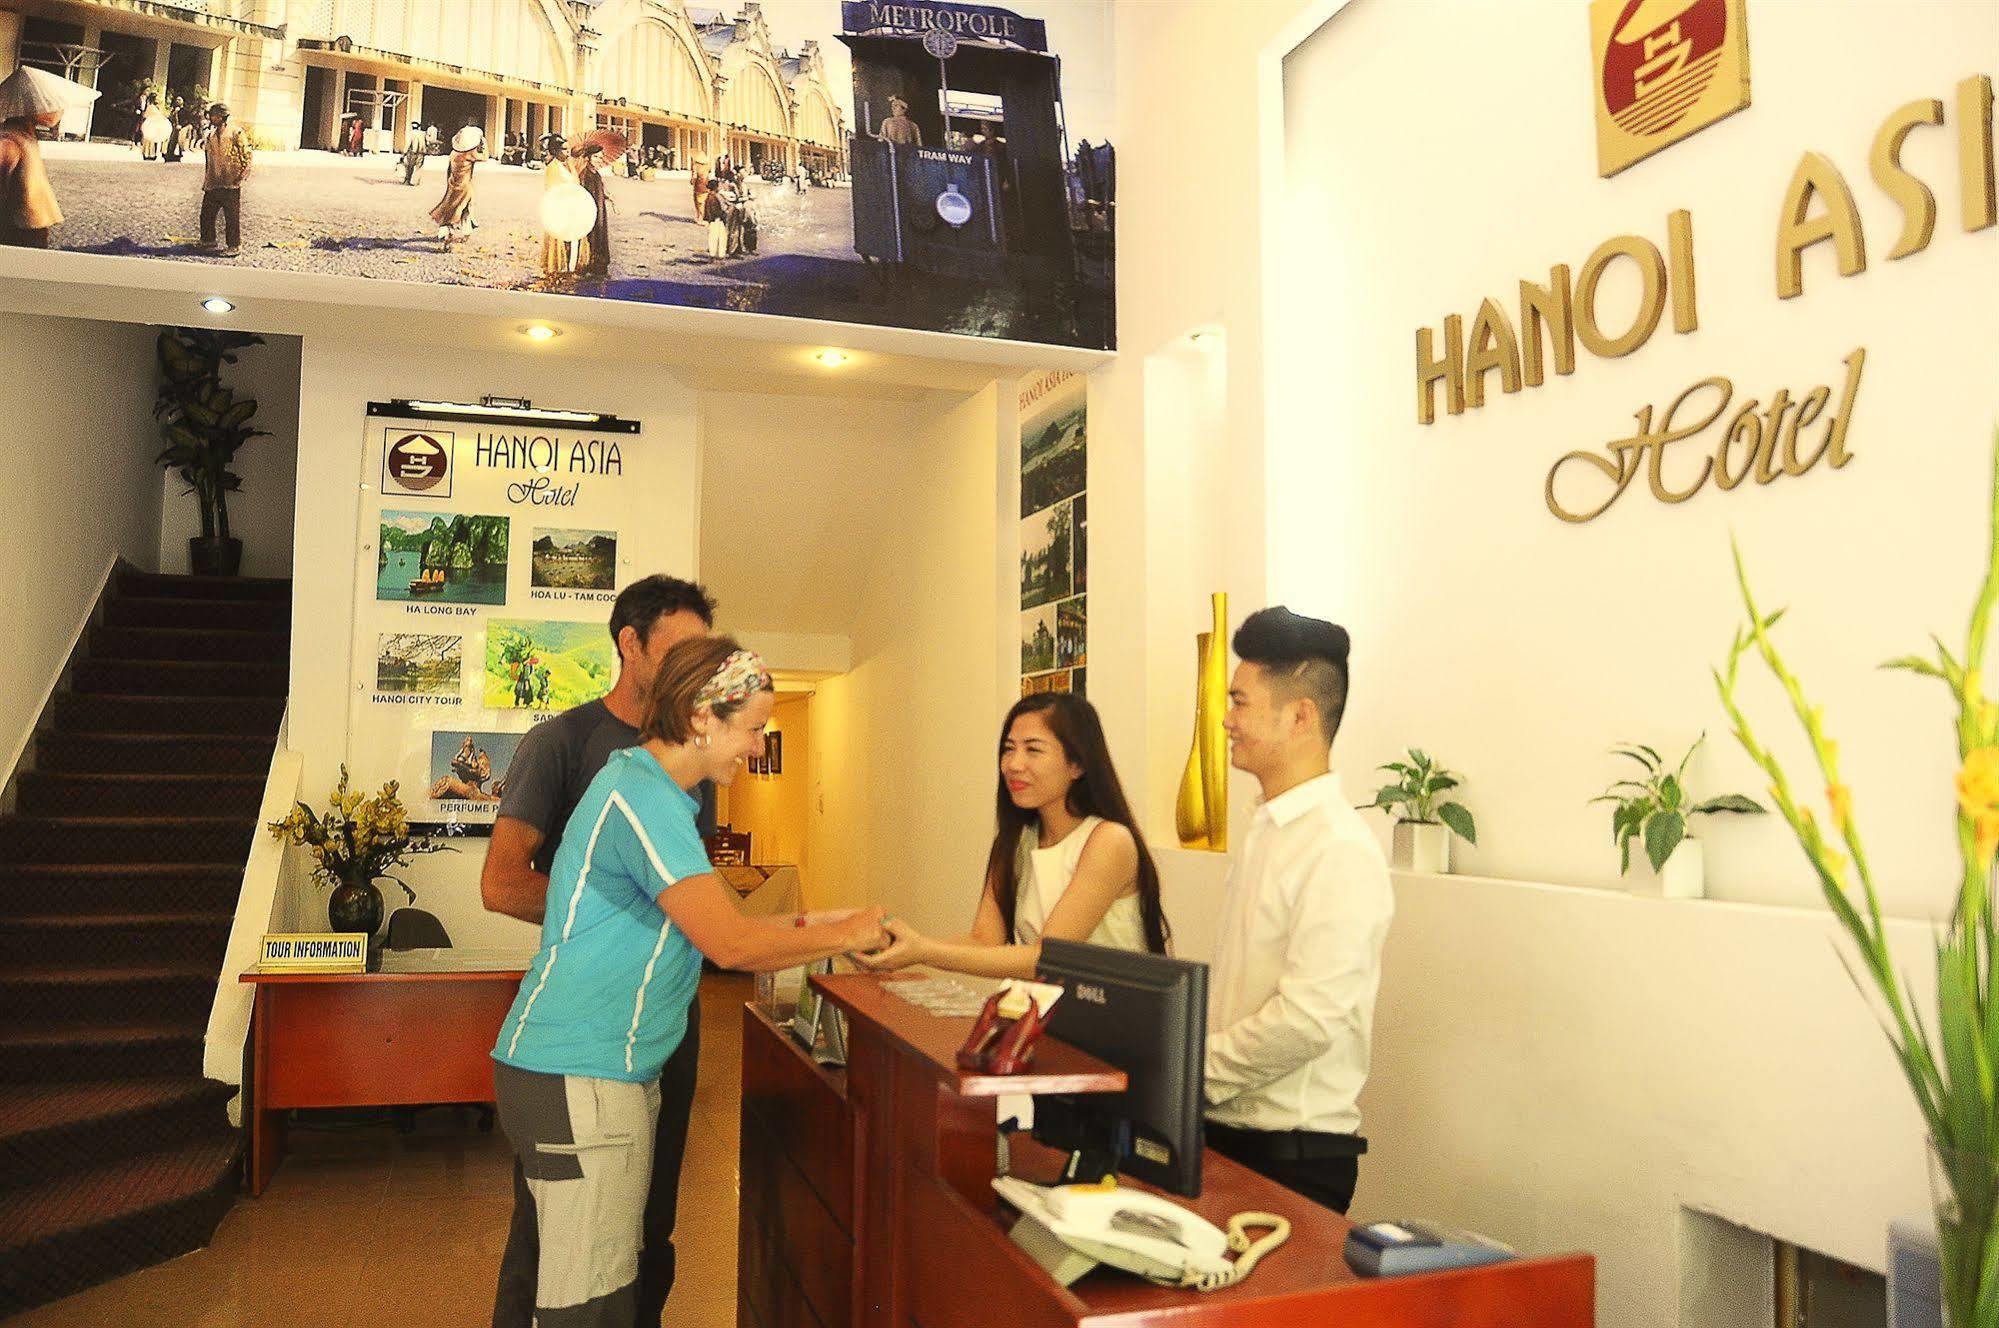 Hanoi Little Center Hotel Экстерьер фото